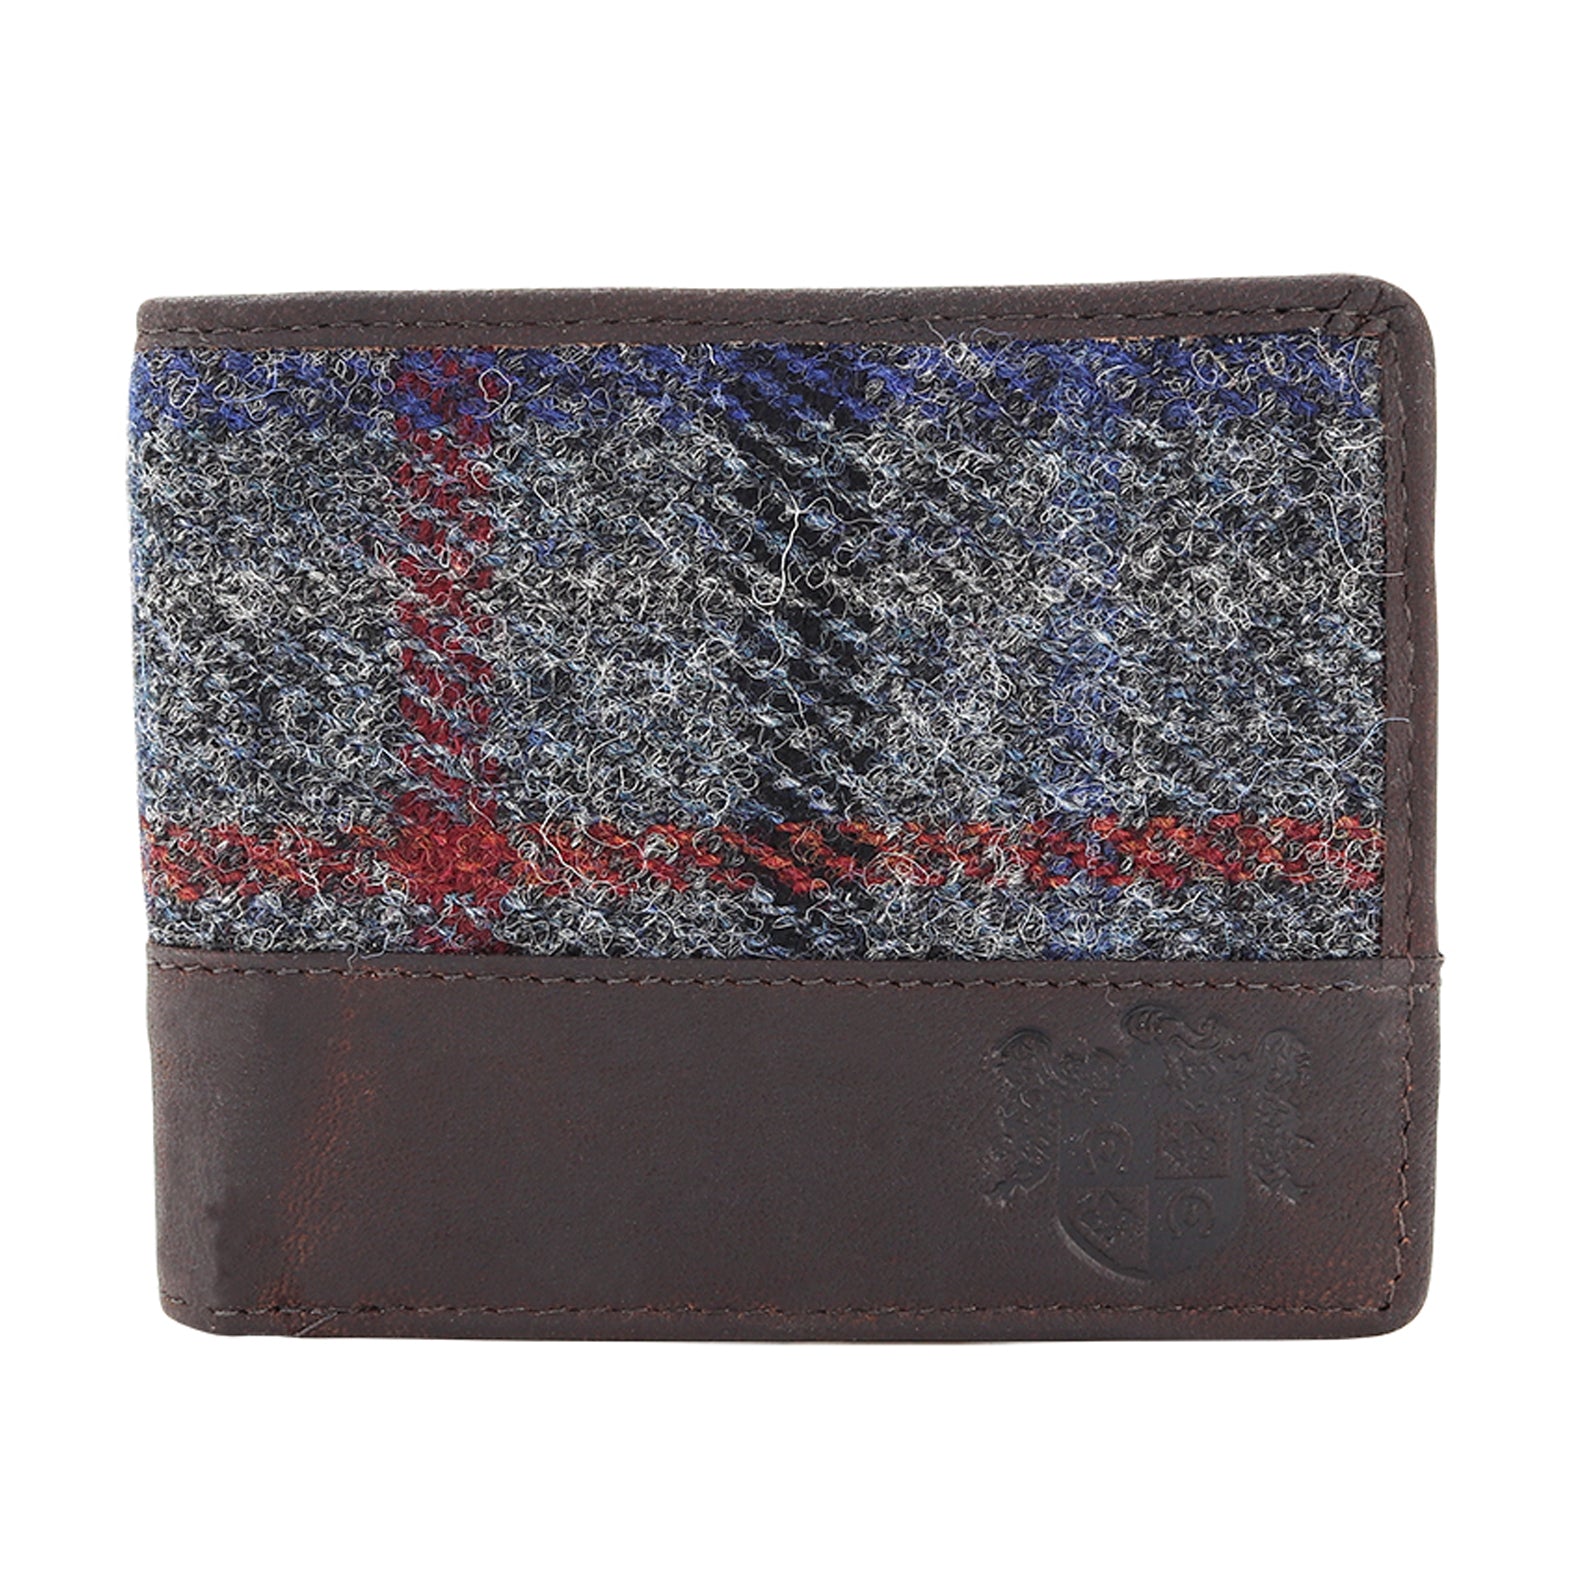 British Bag Co. Finsbay Harris Tweed Wallet